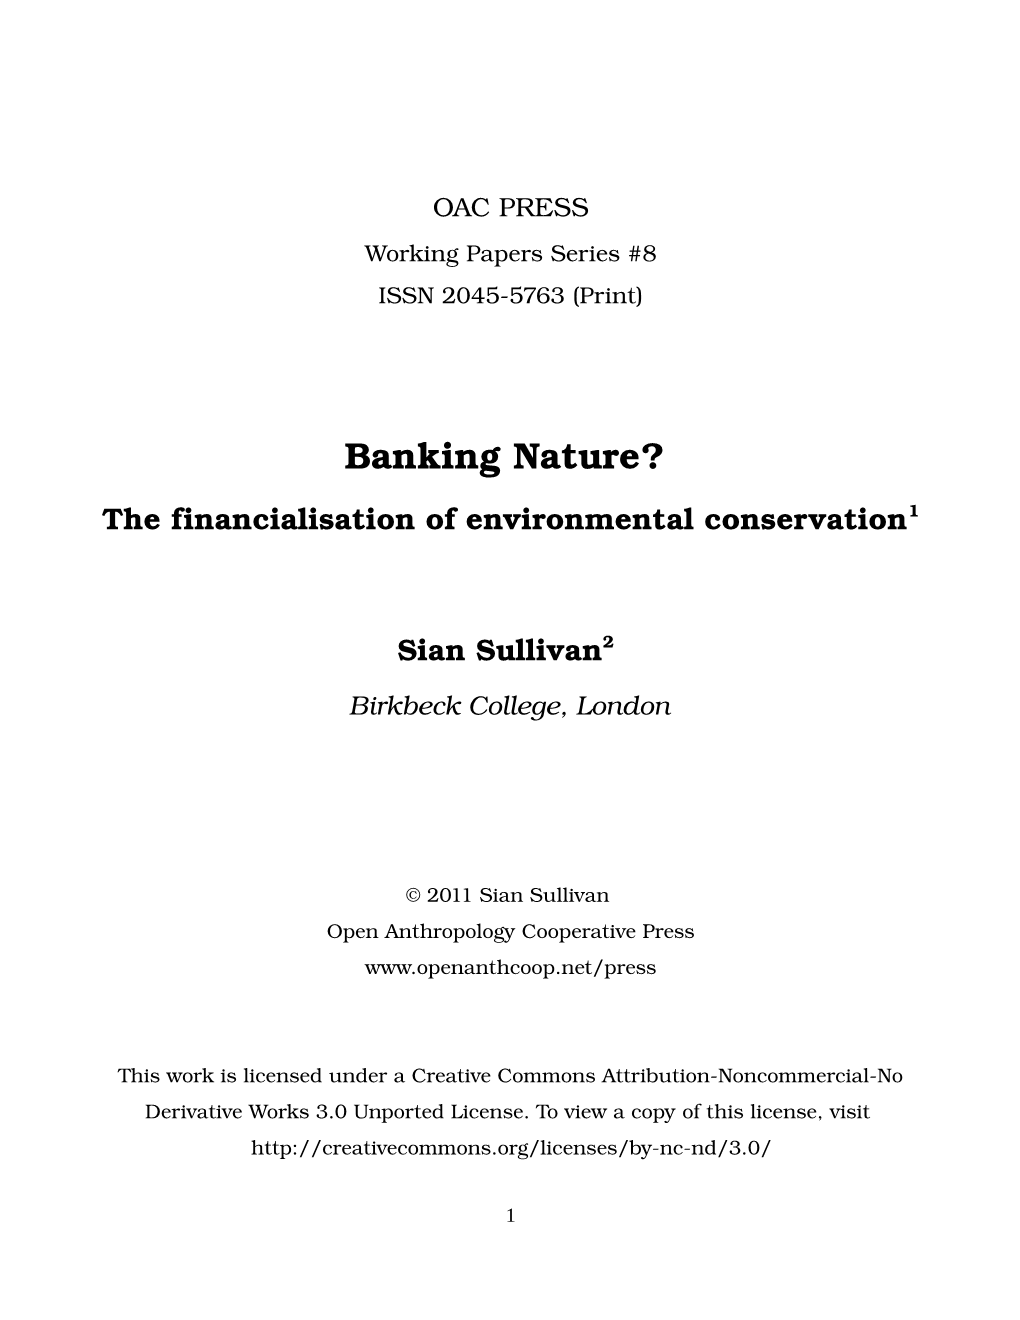 Sullivan, Banking Nature?